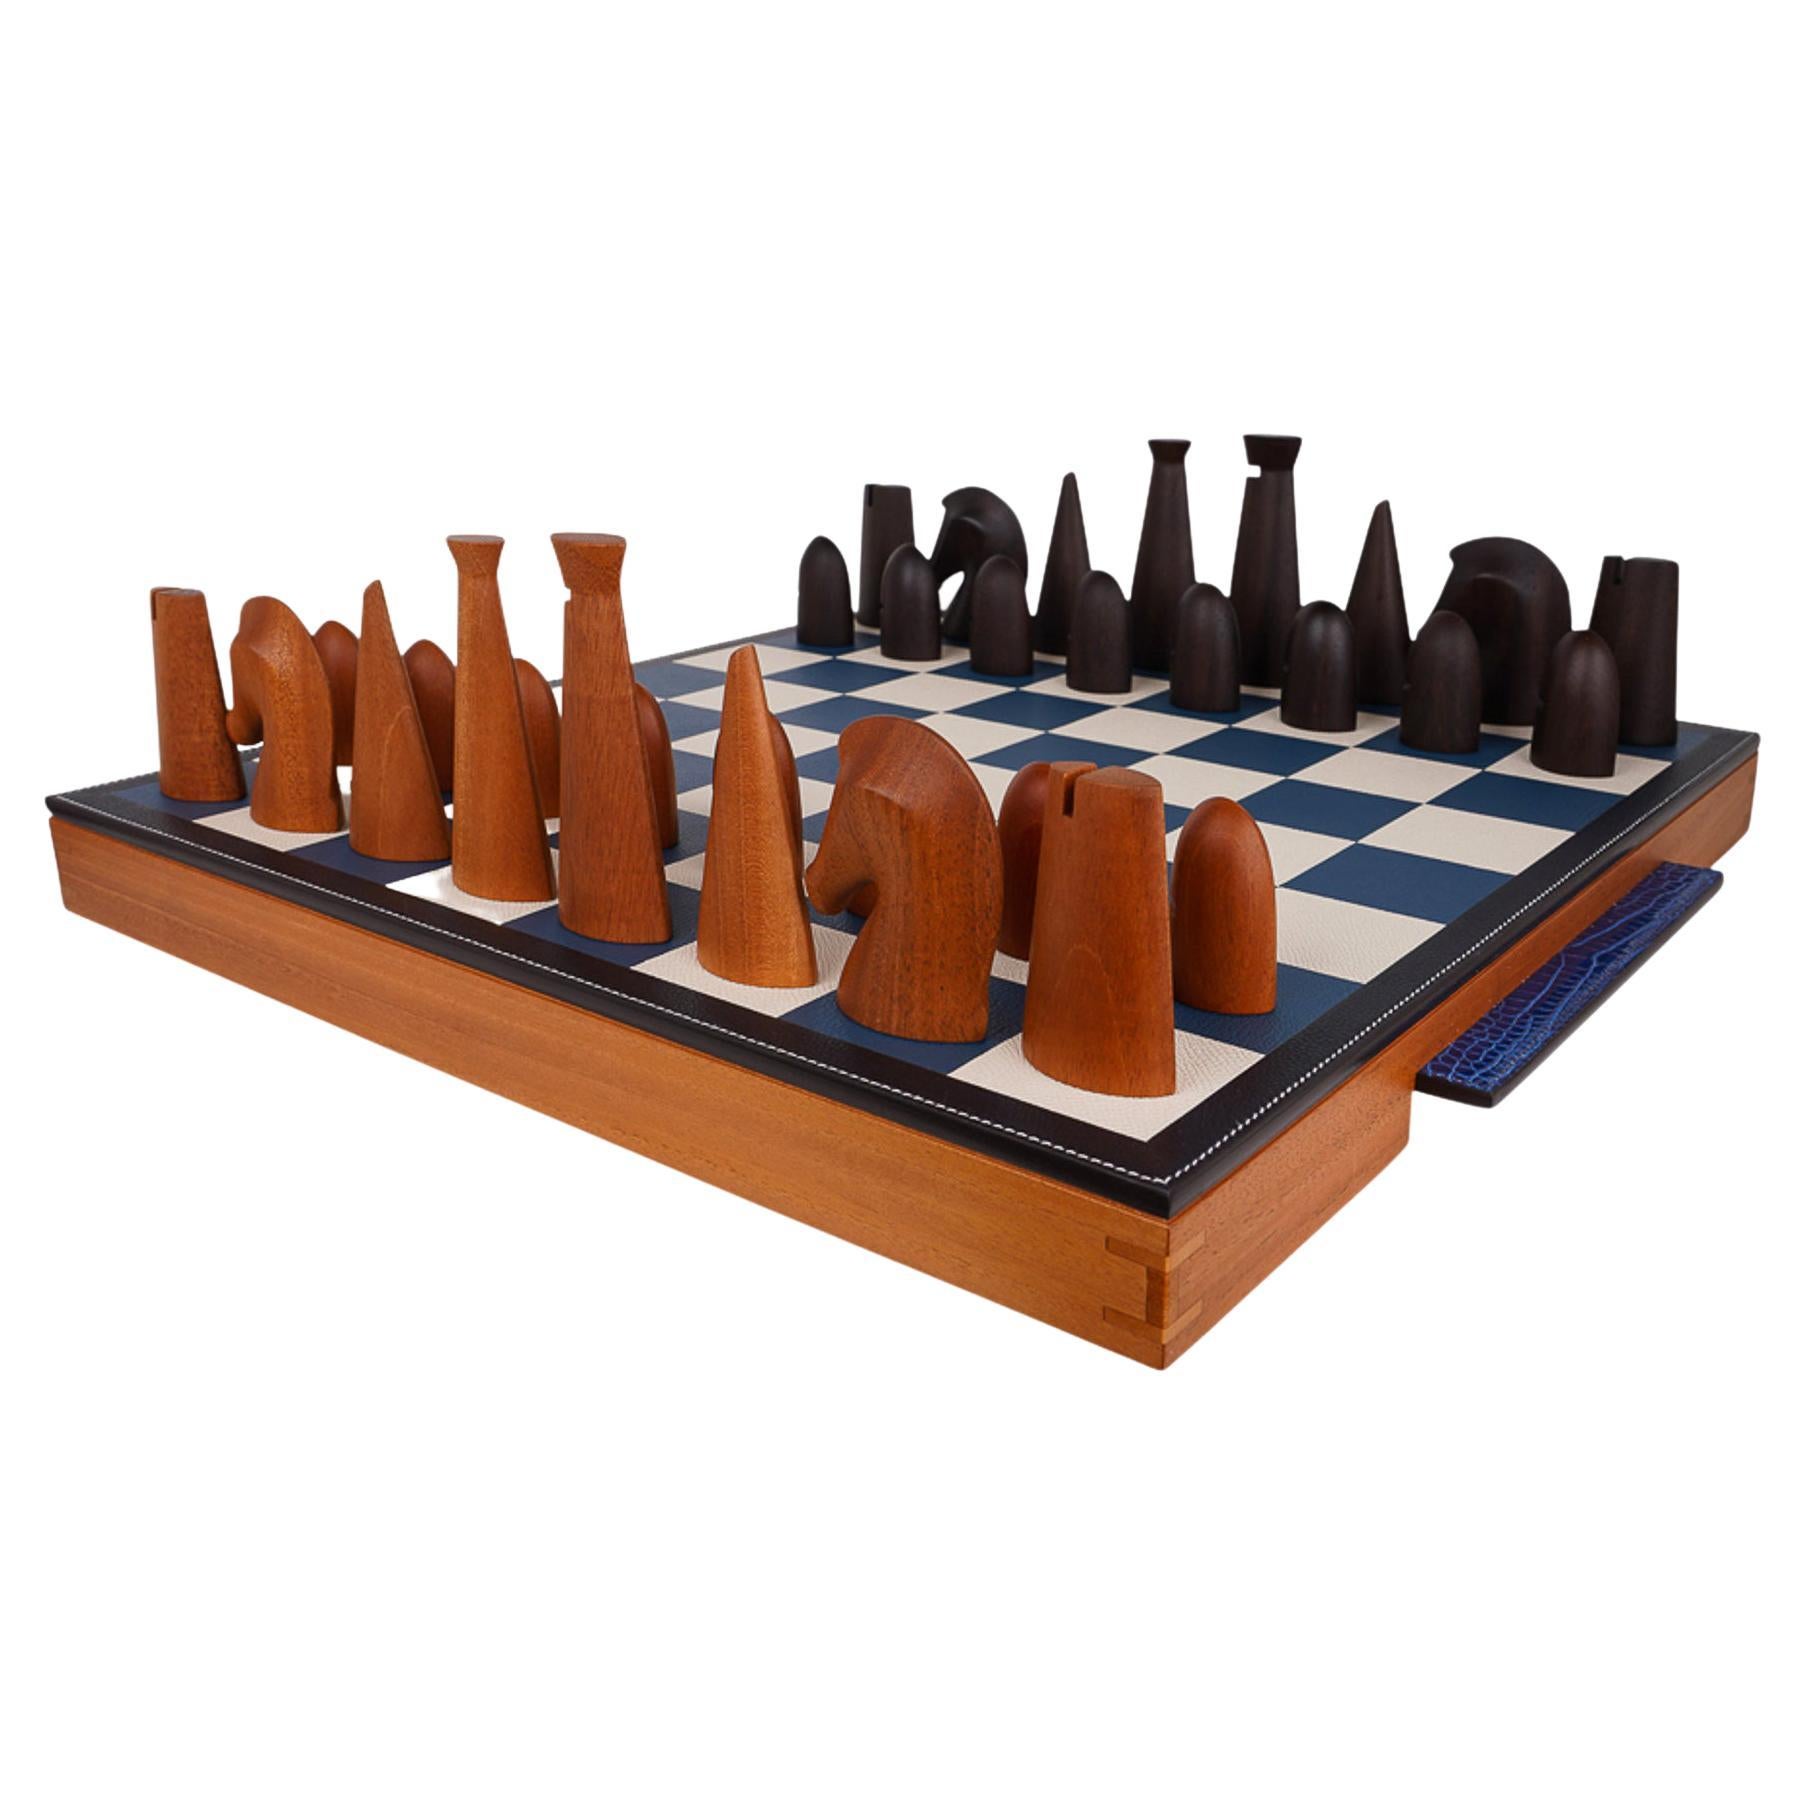 Hermes Samarcande Chess Set Sycamore Mahogany Crocodile Handles New w/ Box For Sale